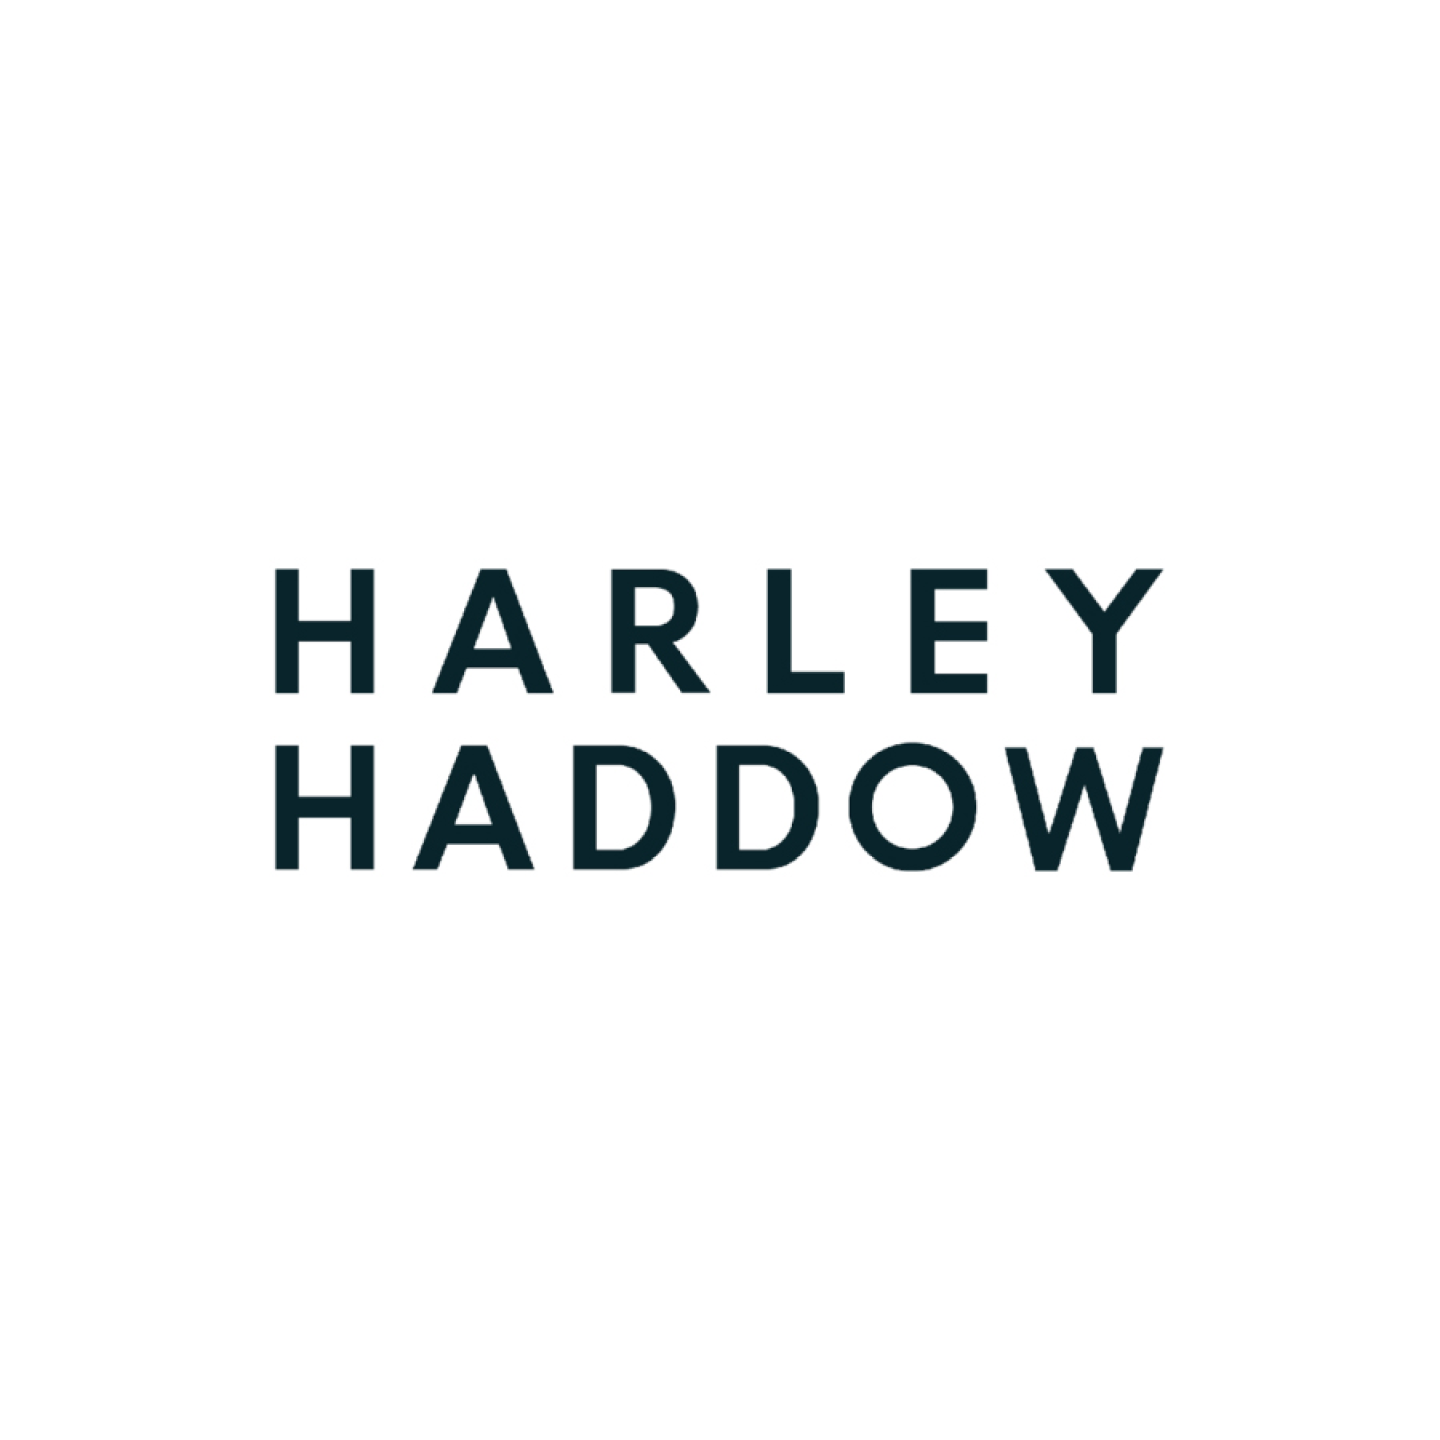 Harley Haddow Final logo.